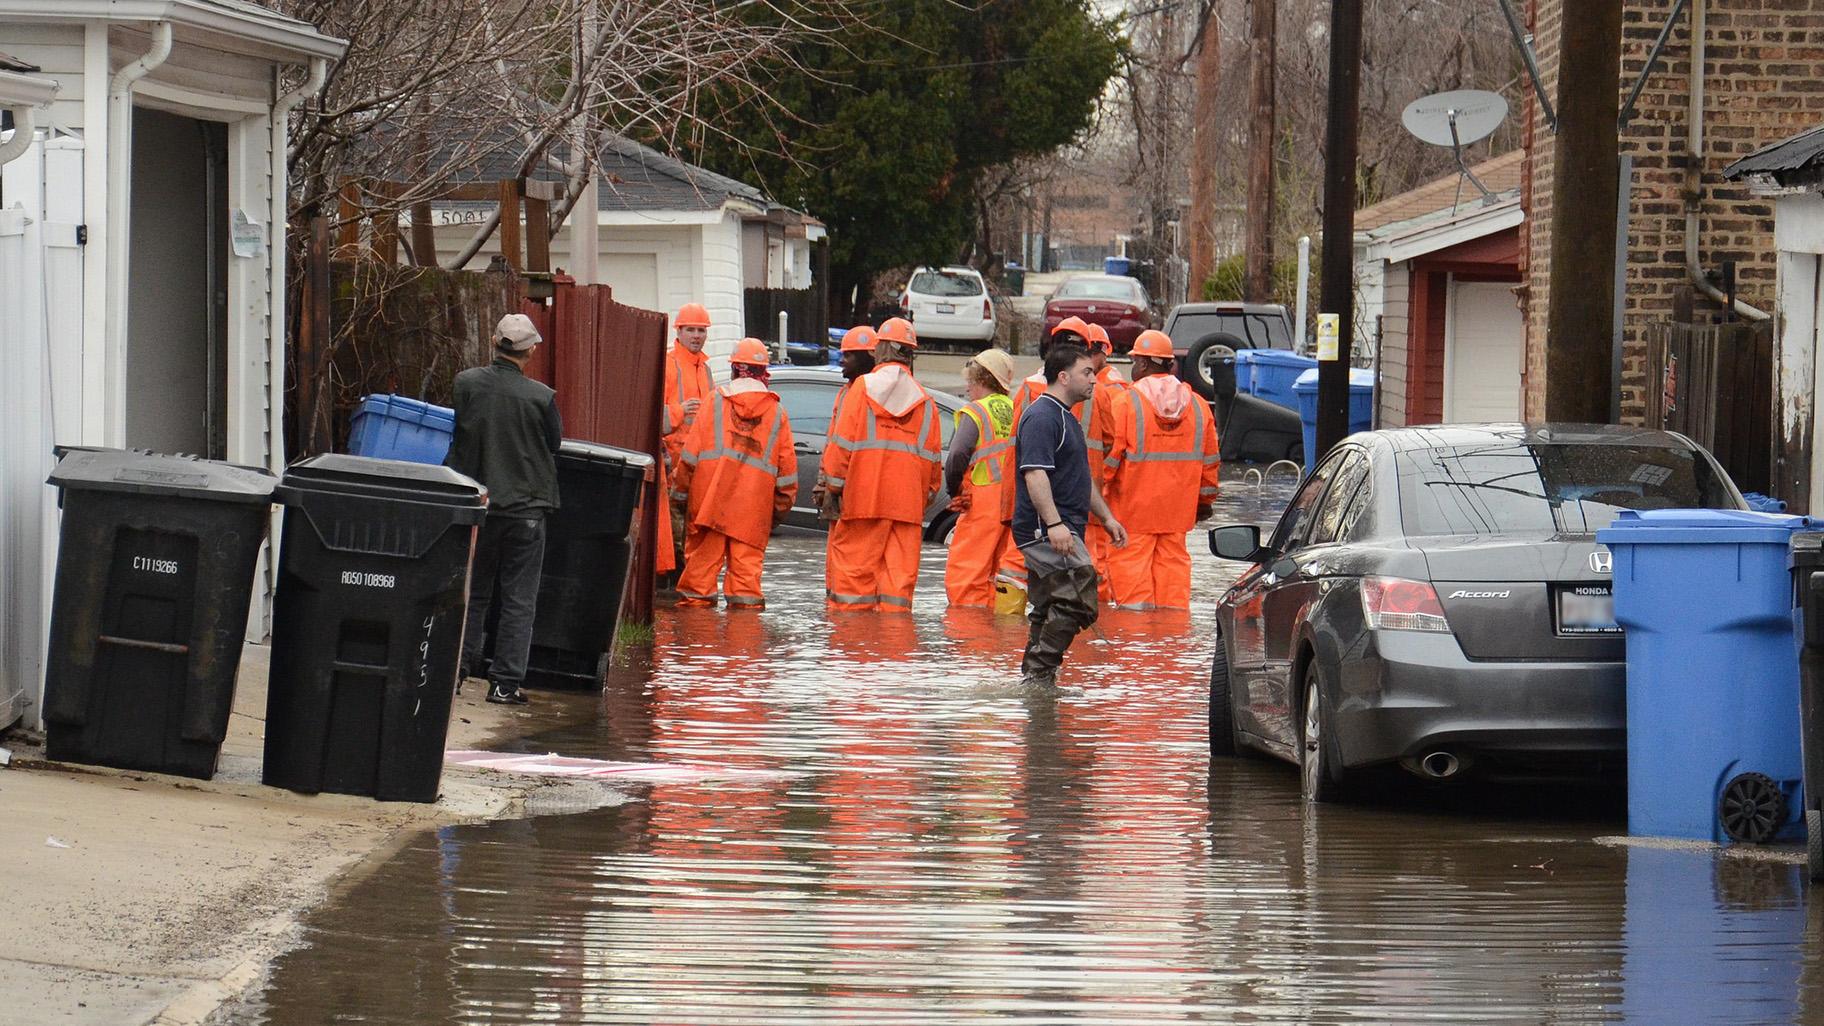 Flooding in Chicago’s Albany Park neighborhood on April 18, 2013. (Center for Neighborhood Technology / Flickr)